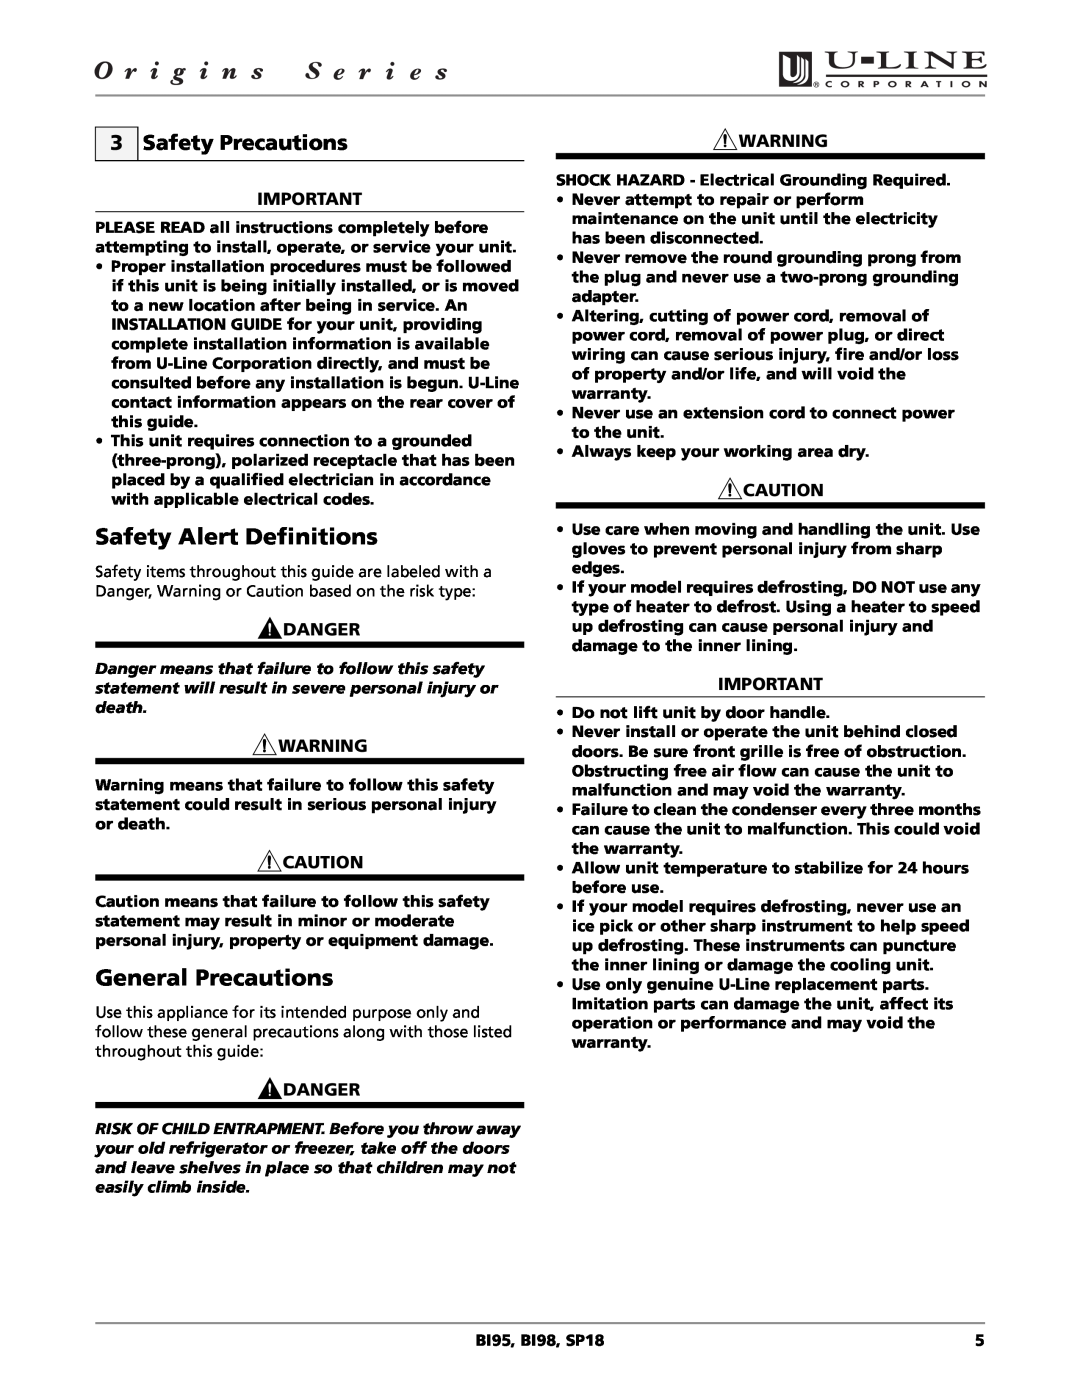 U-Line BI95, SP18, BI98 manual Safety Alert Definitions, General Precautions, Safety Precautions, Danger 